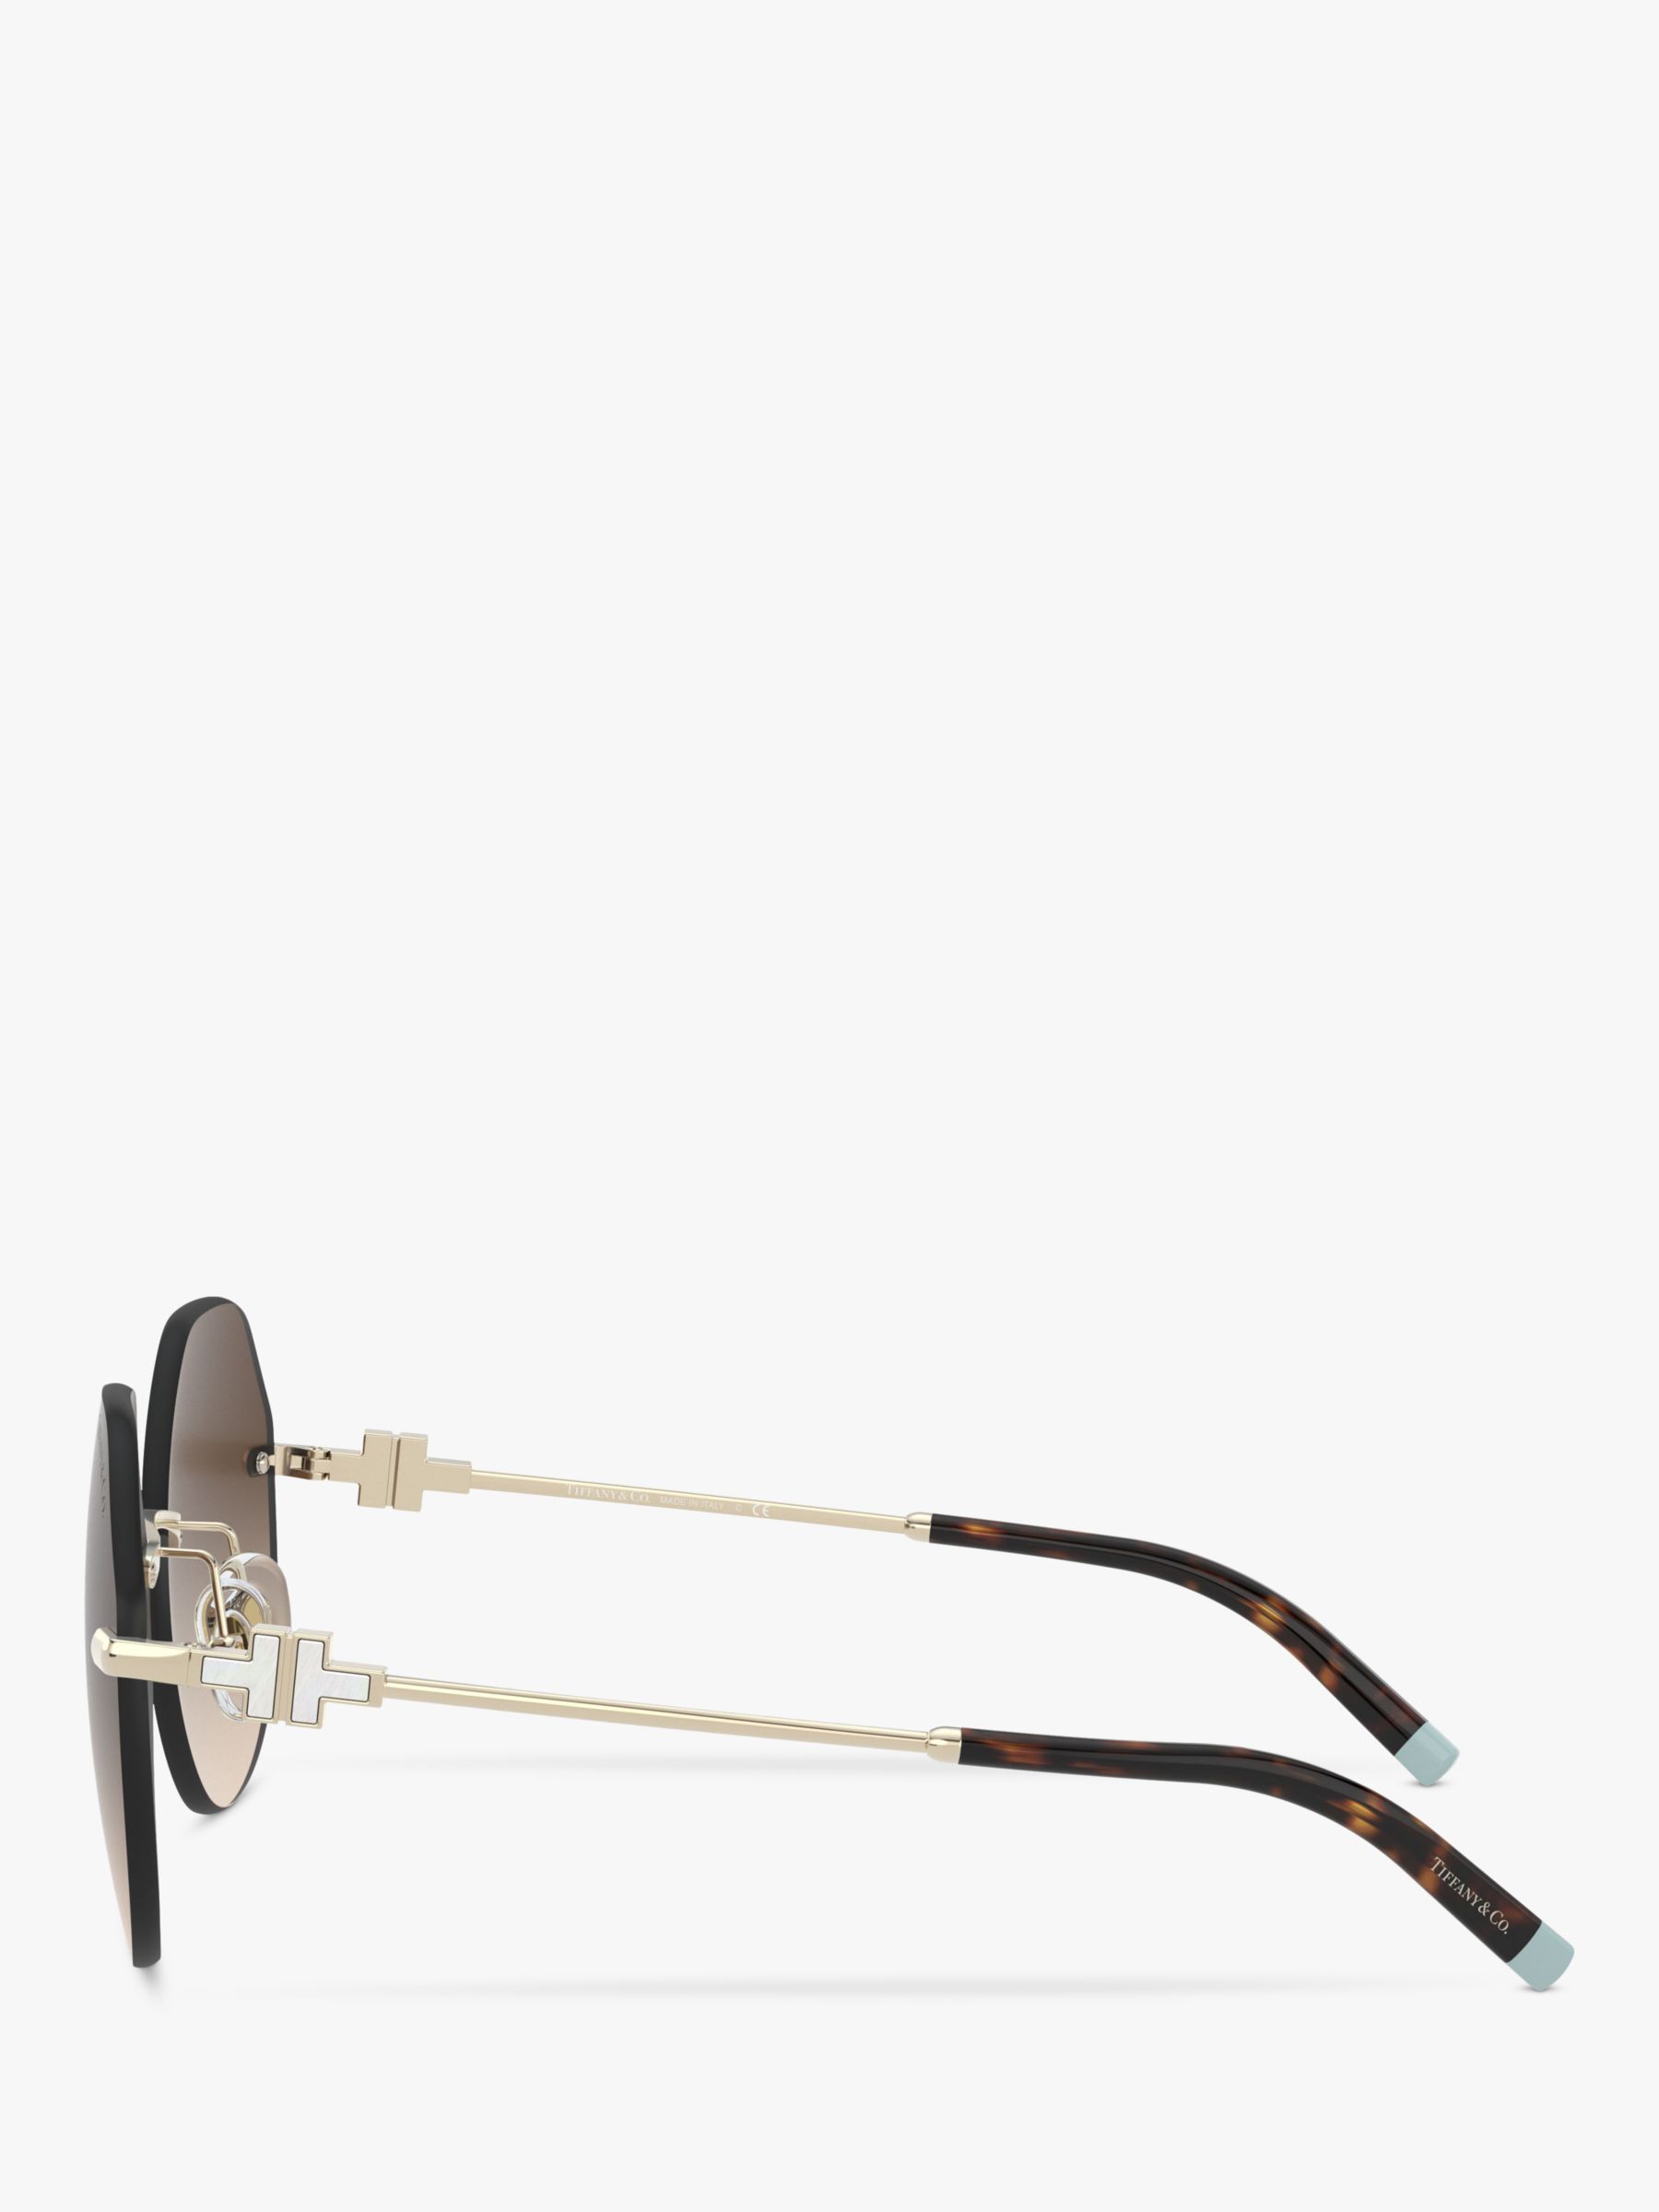 Tiffany & Co TF3077 Women's Irregular Sunglasses, Pale Gold